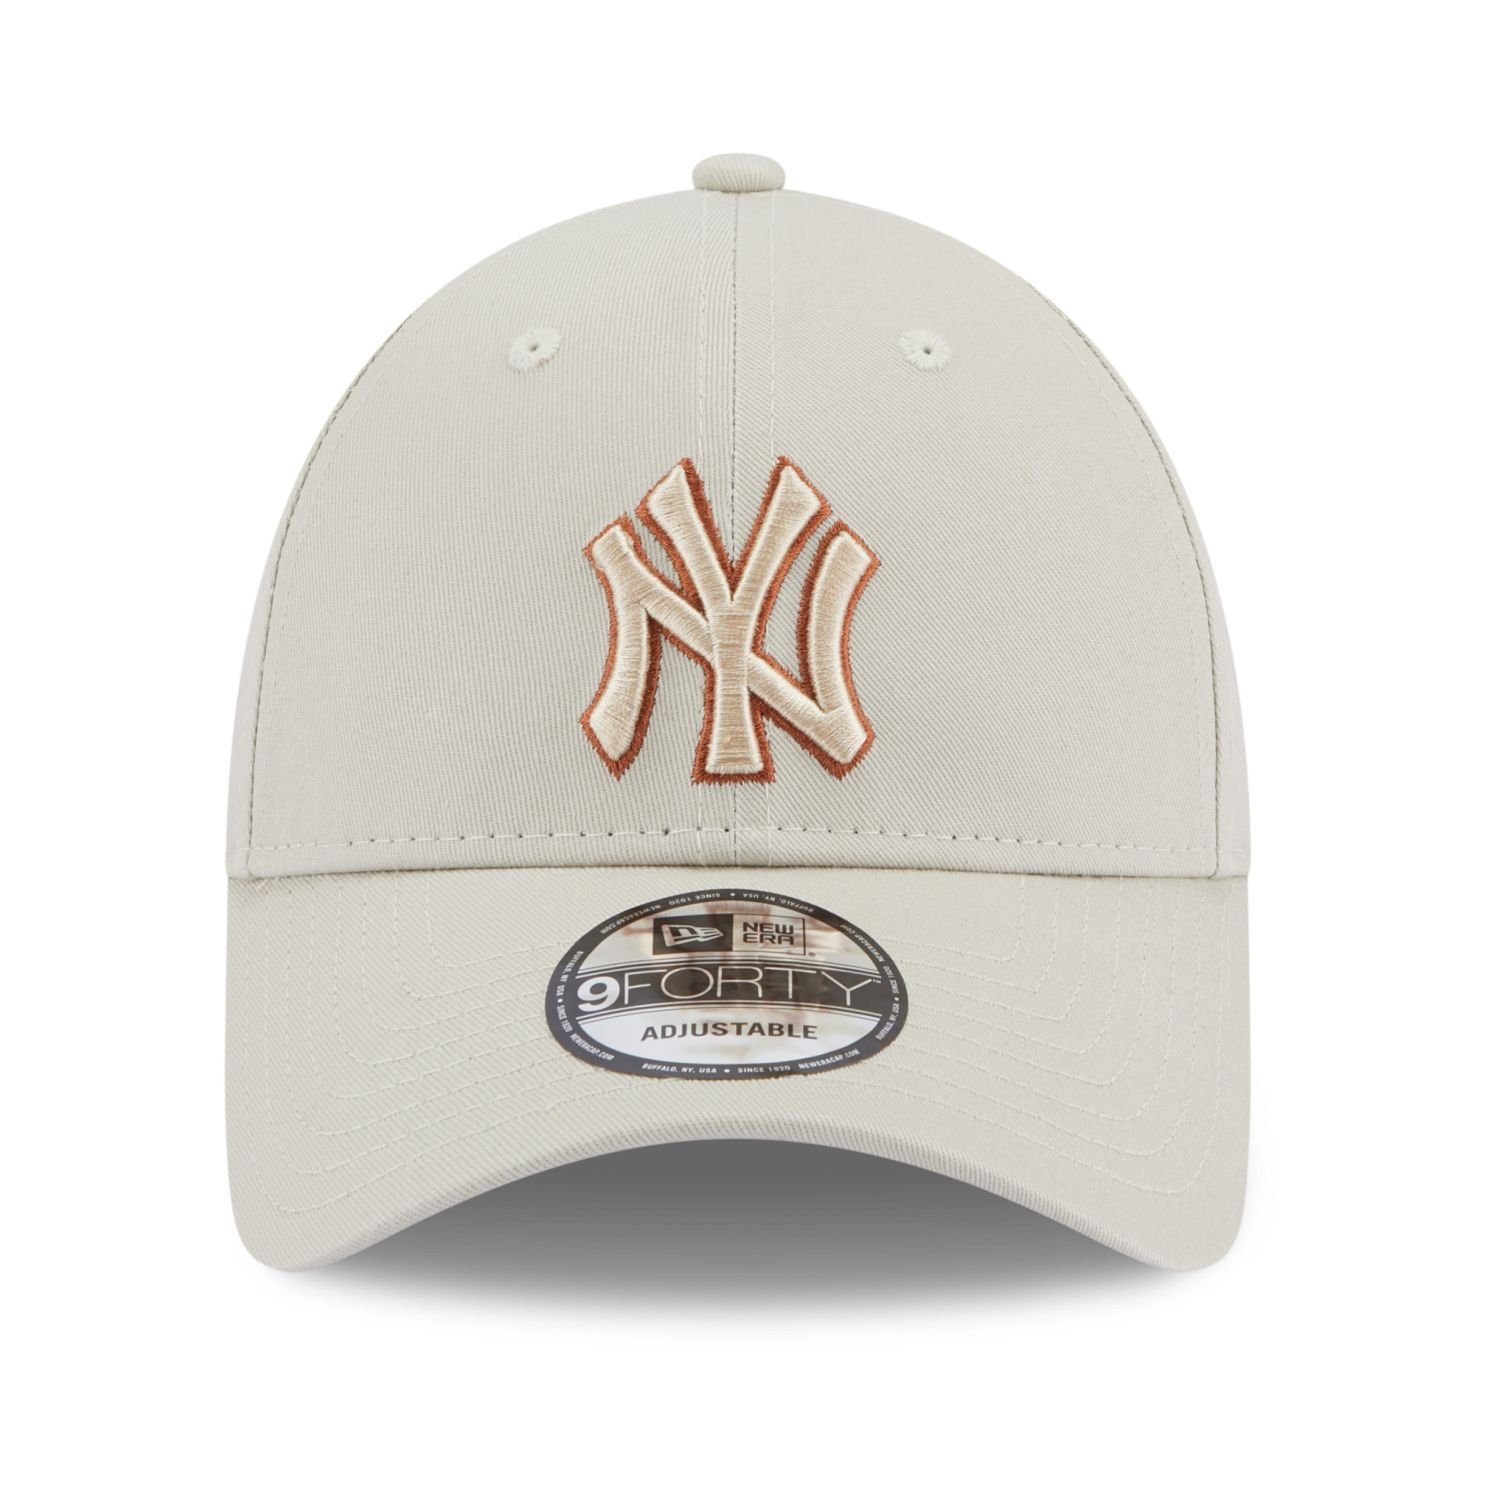 Baseball Strapback Yankees beige 9Forty Era York New Cap New OUTLINE